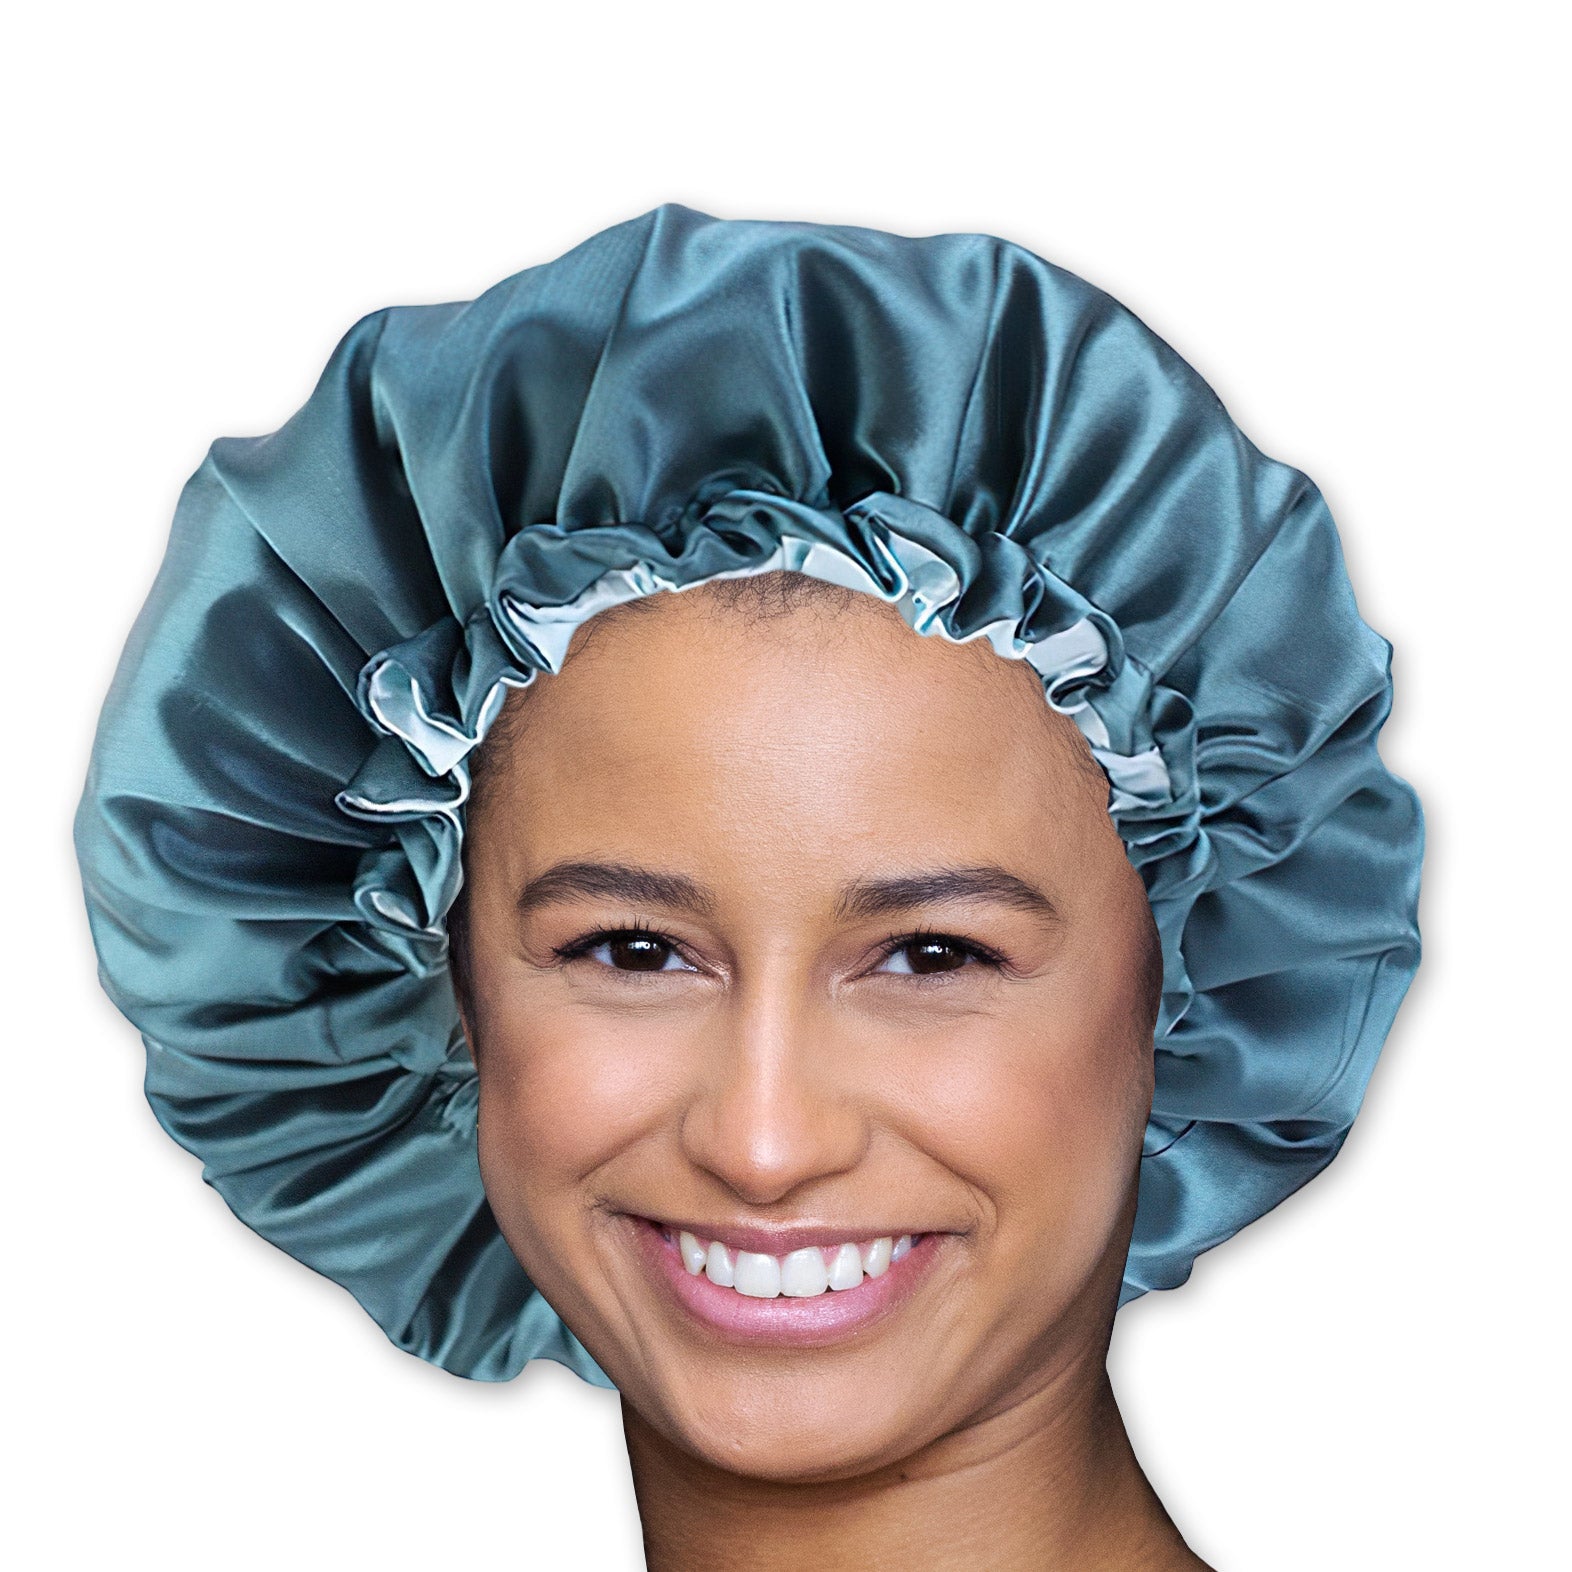 Purchase Wholesale satin hair bonnets. Free Returns & Net 60 Terms